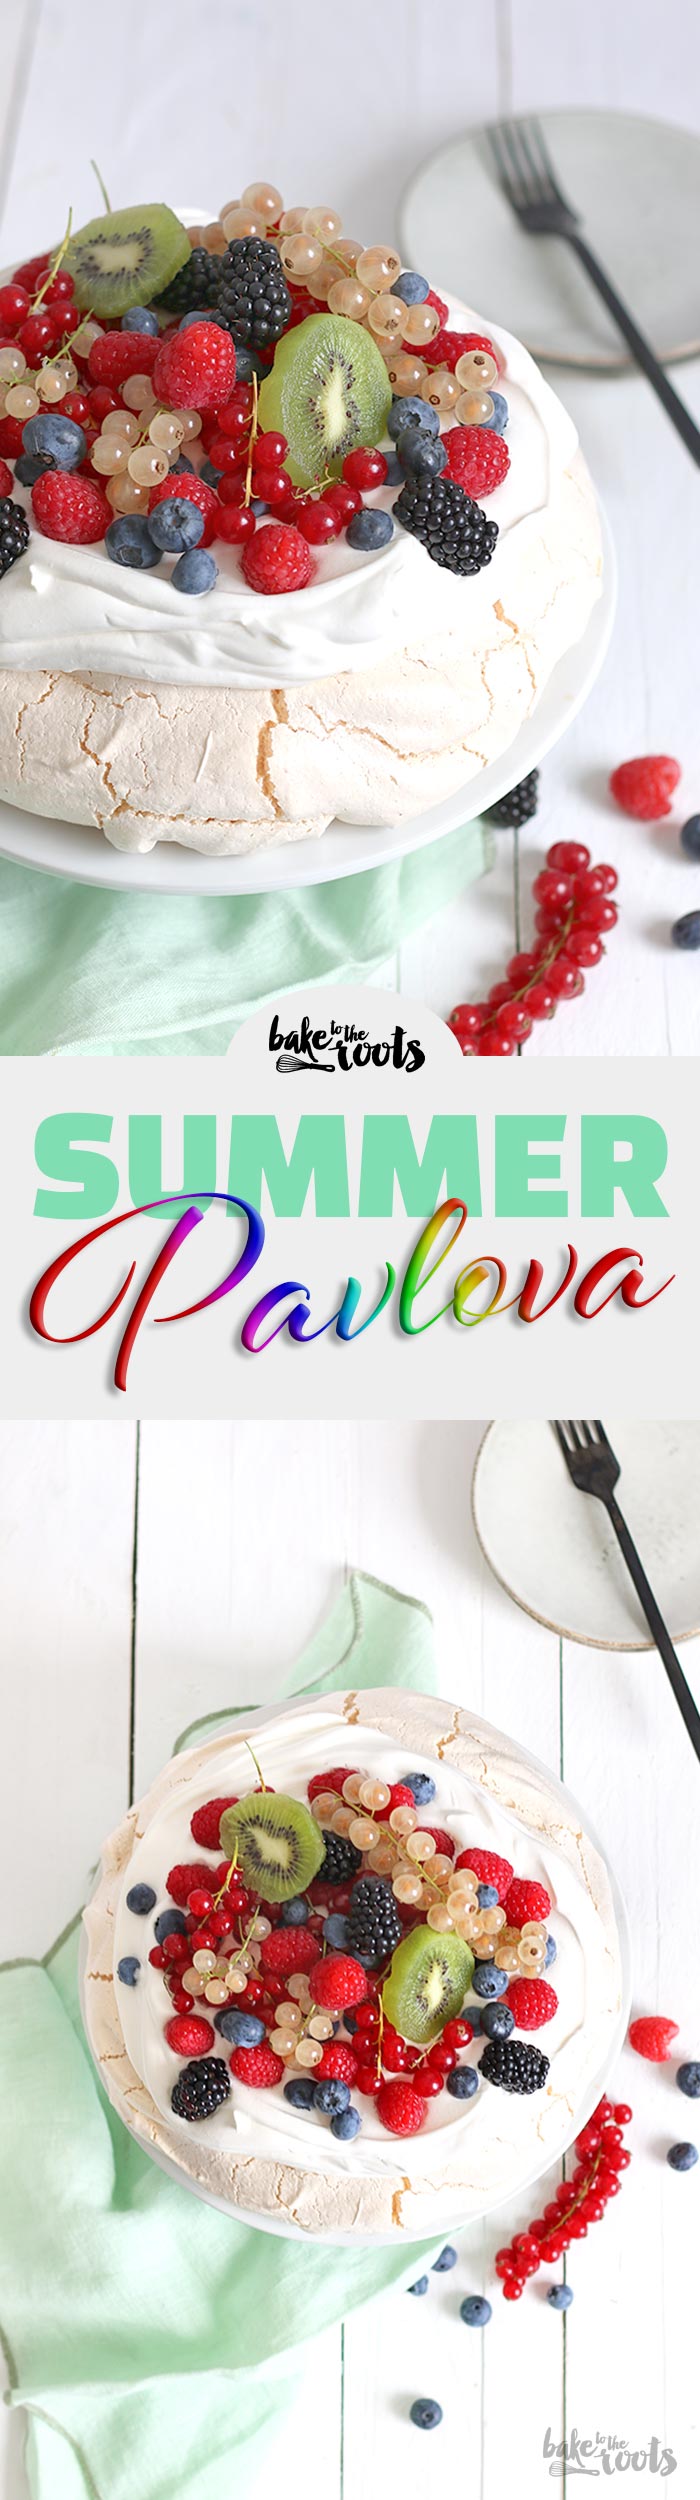 Summer Pavlova | Bake to the roots